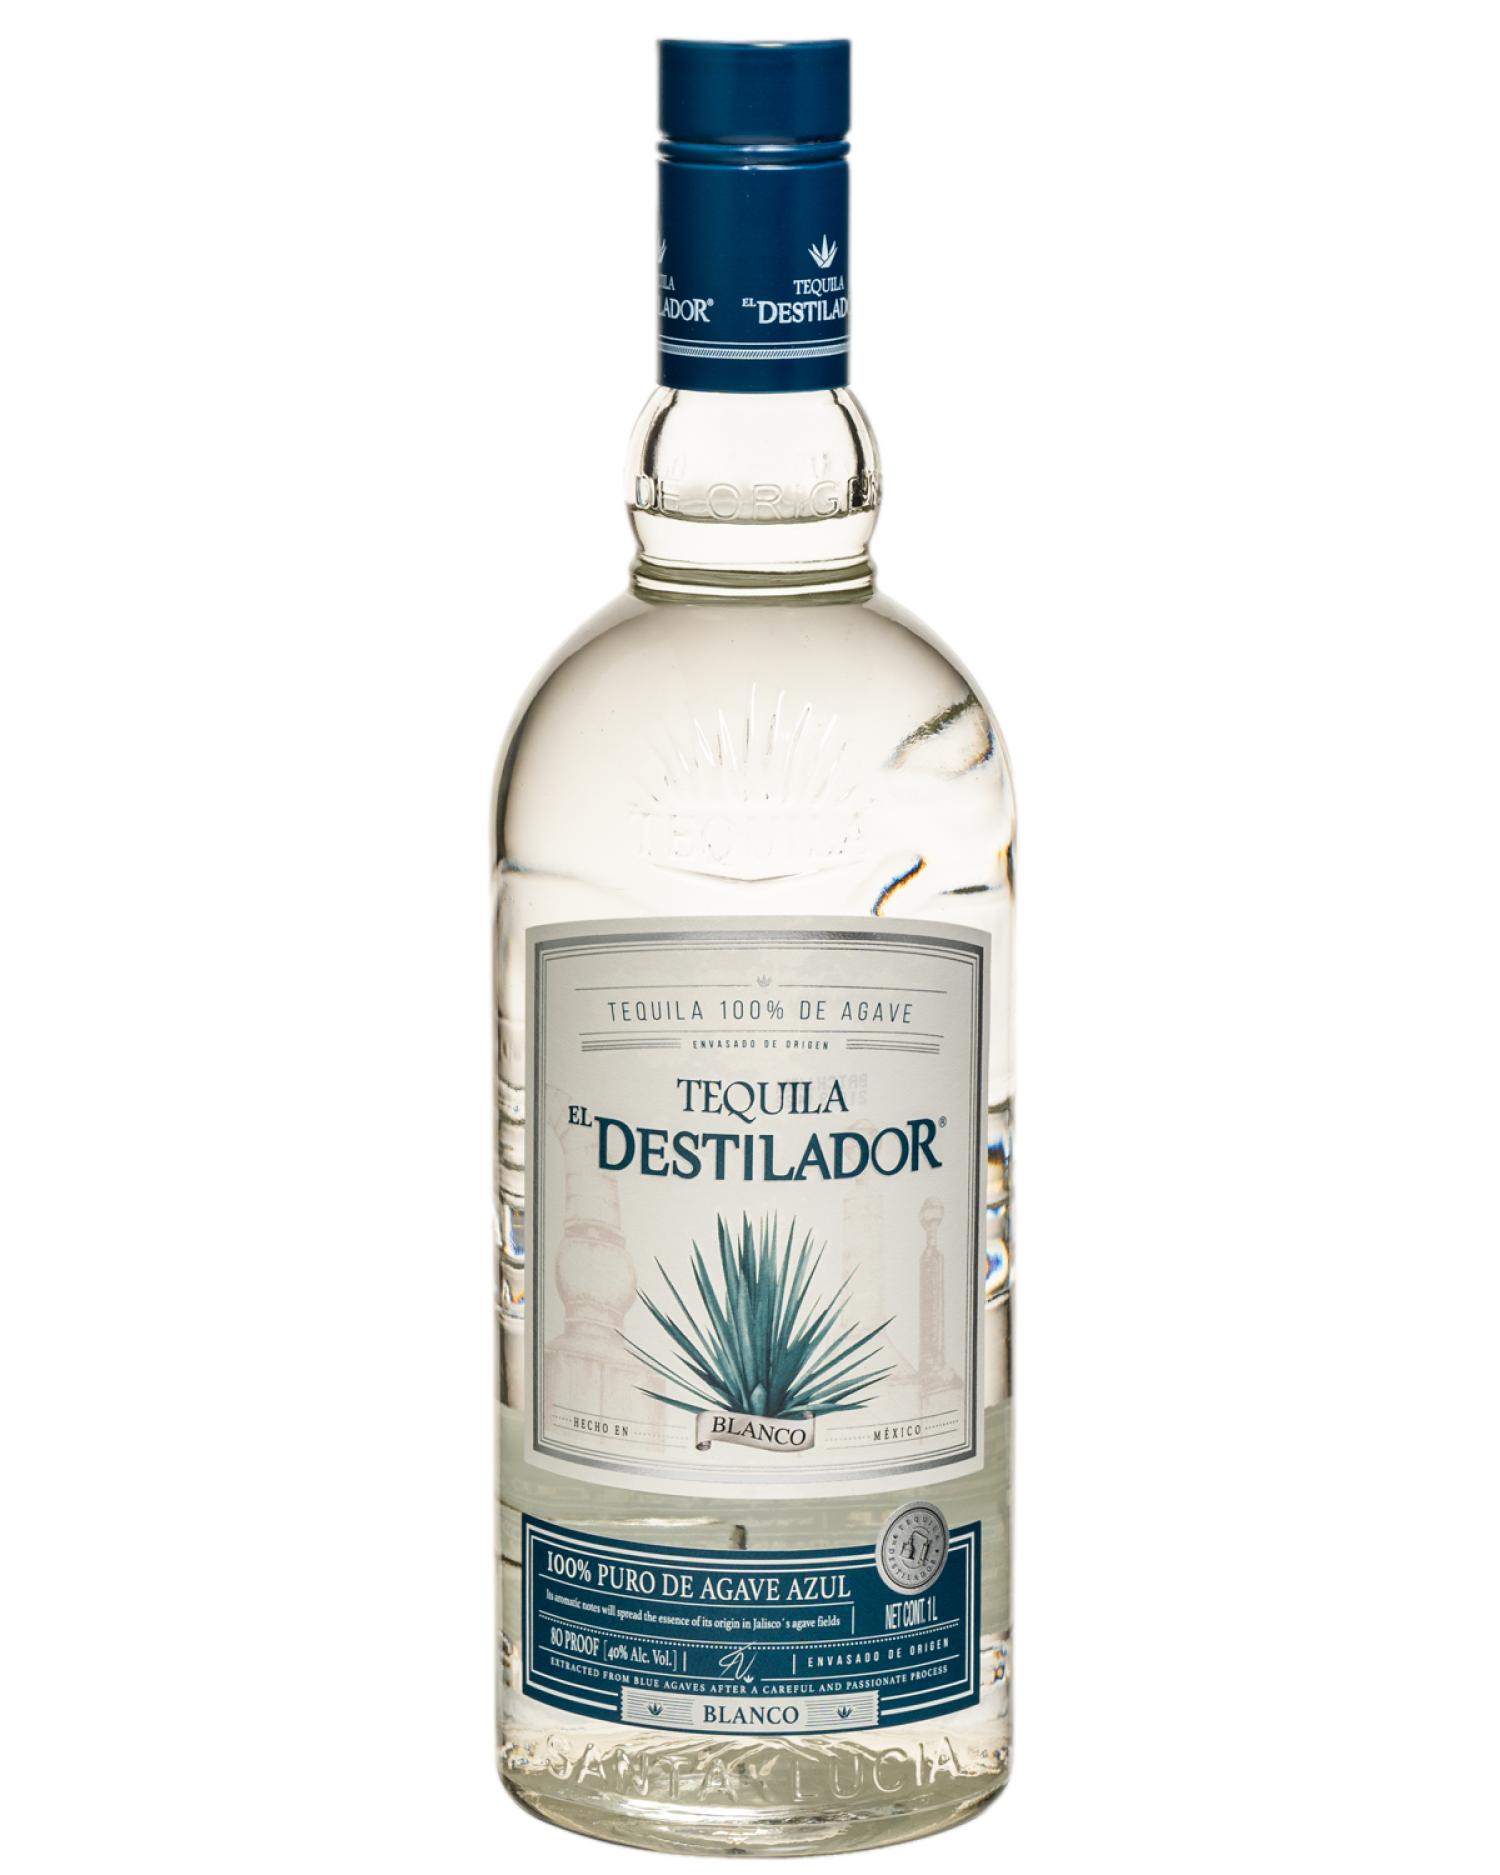 Pick of the month: El Destilador Tequila